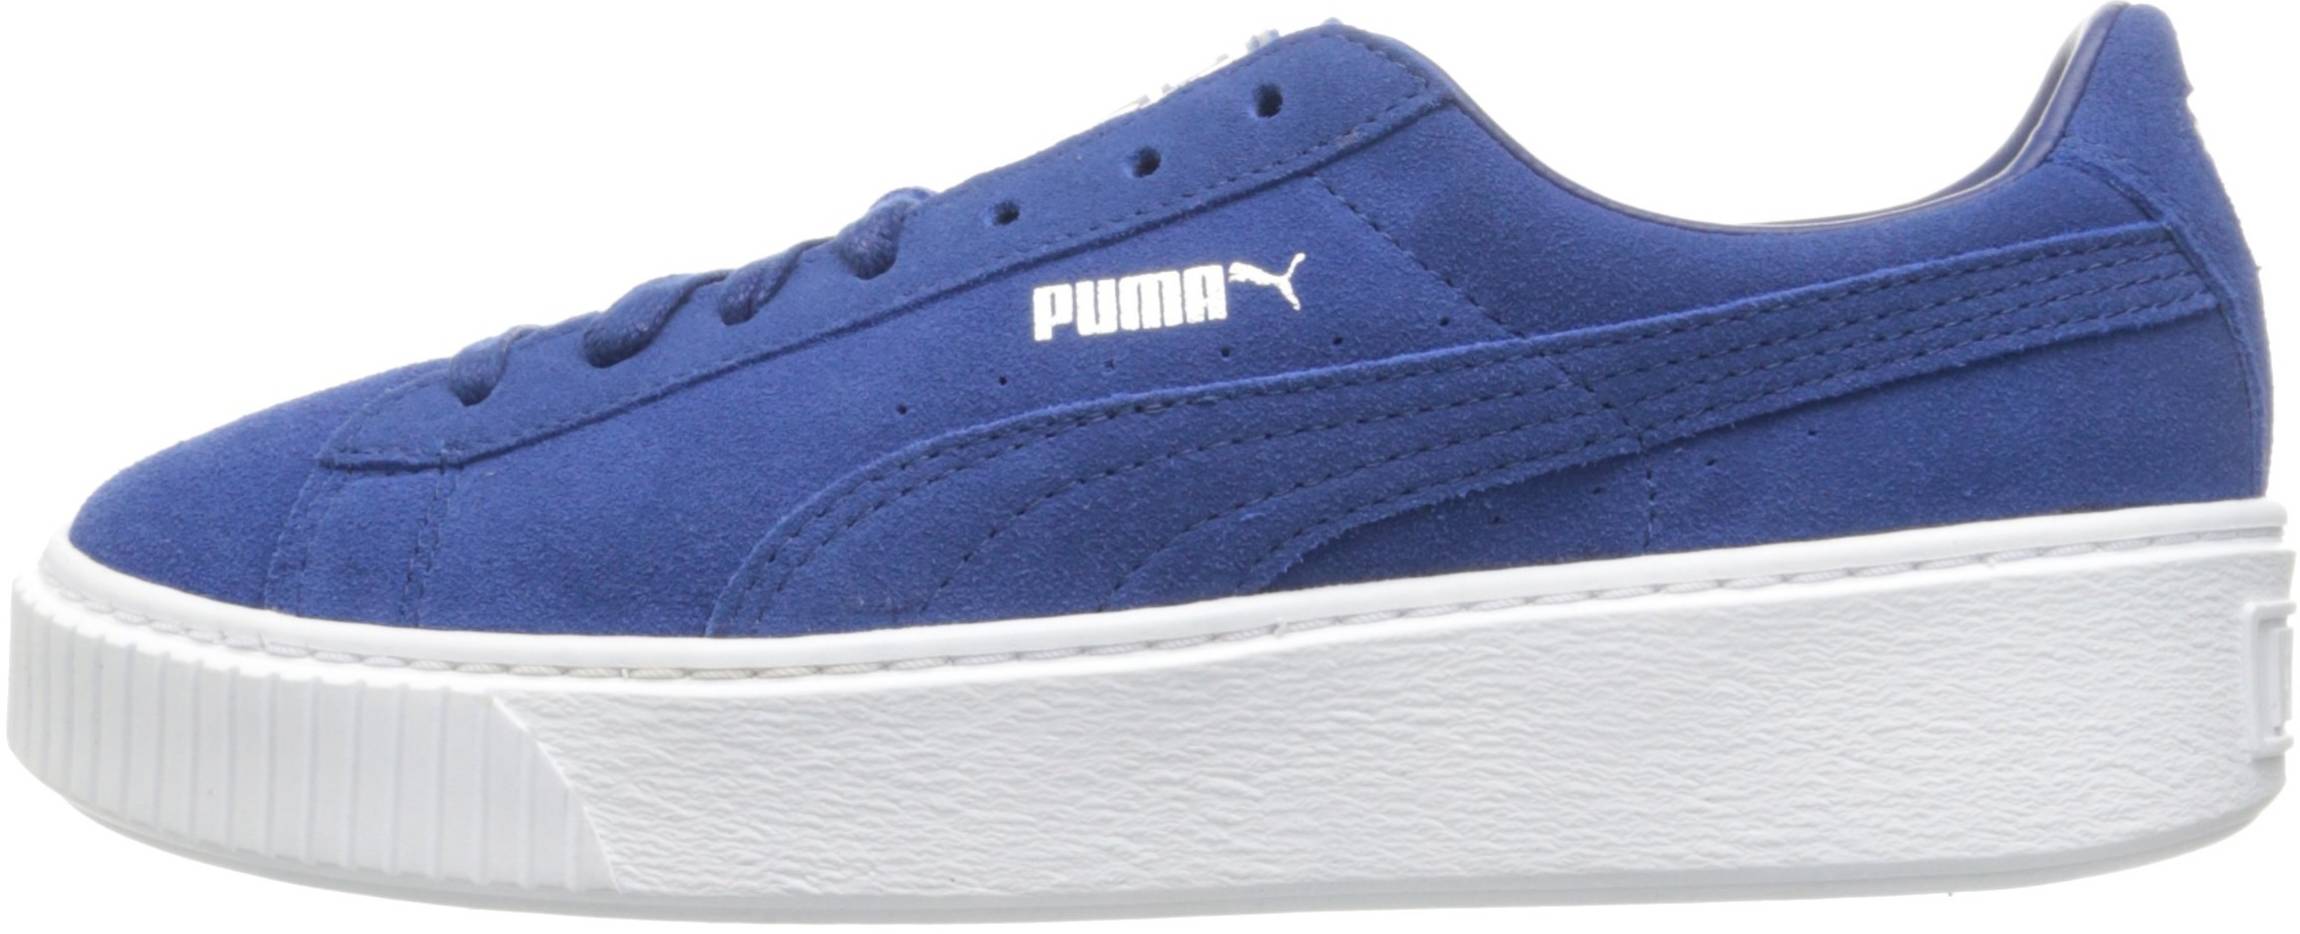 Susurro insalubre Gracia PUMA Suede Platform sneakers (only $50) | RunRepeat